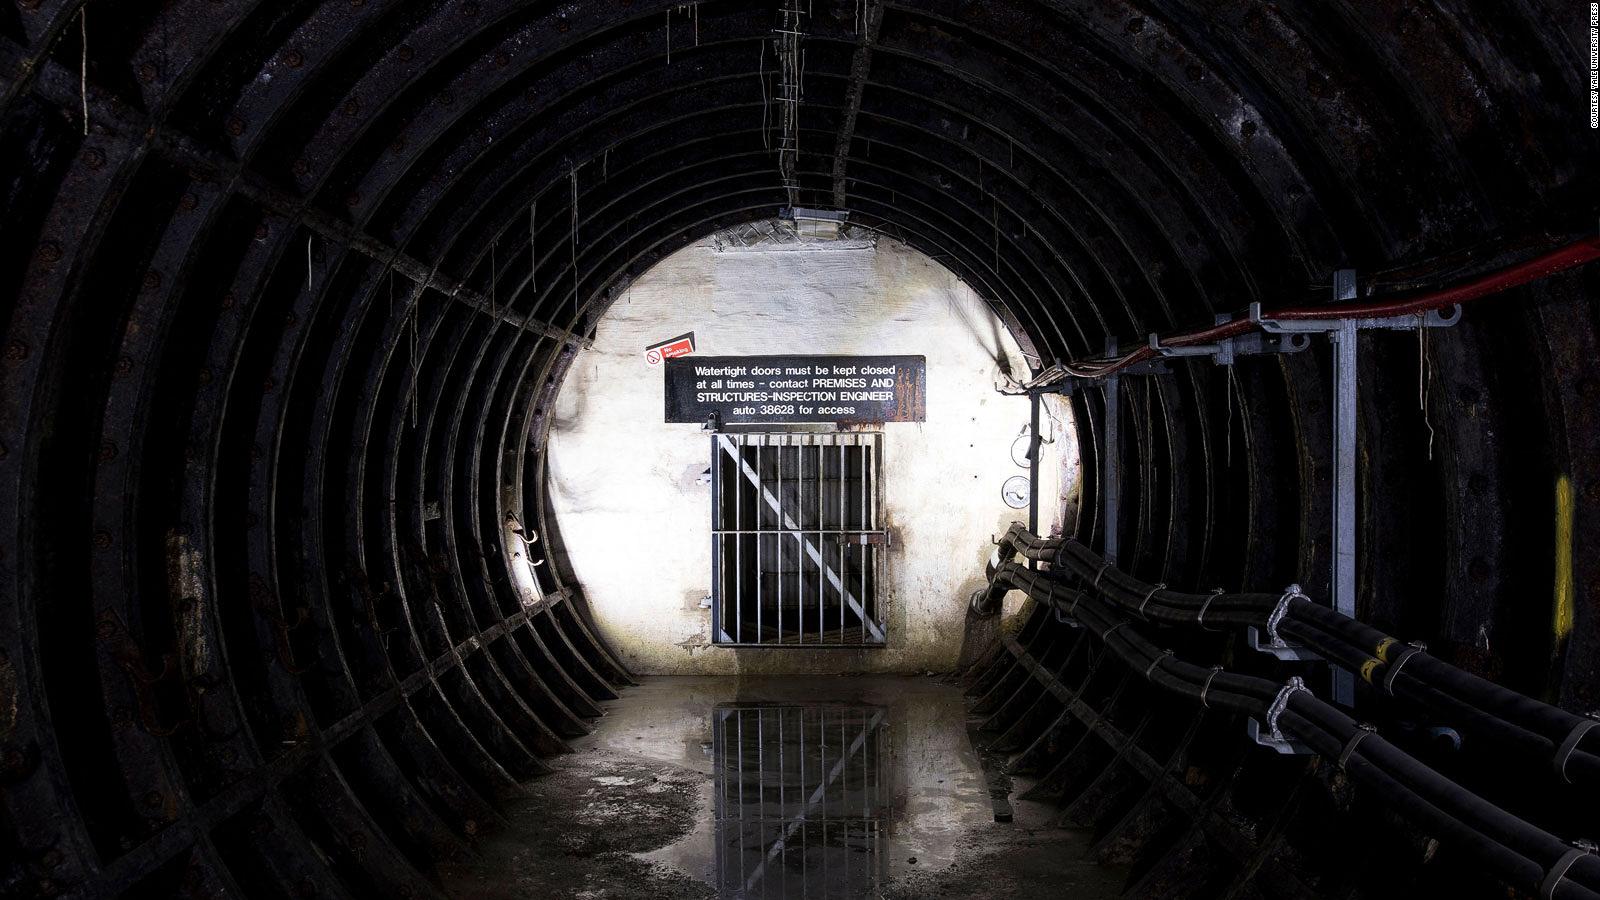 London S Abandoned Underground Stations New Book Explores Secret World Cnn Travel